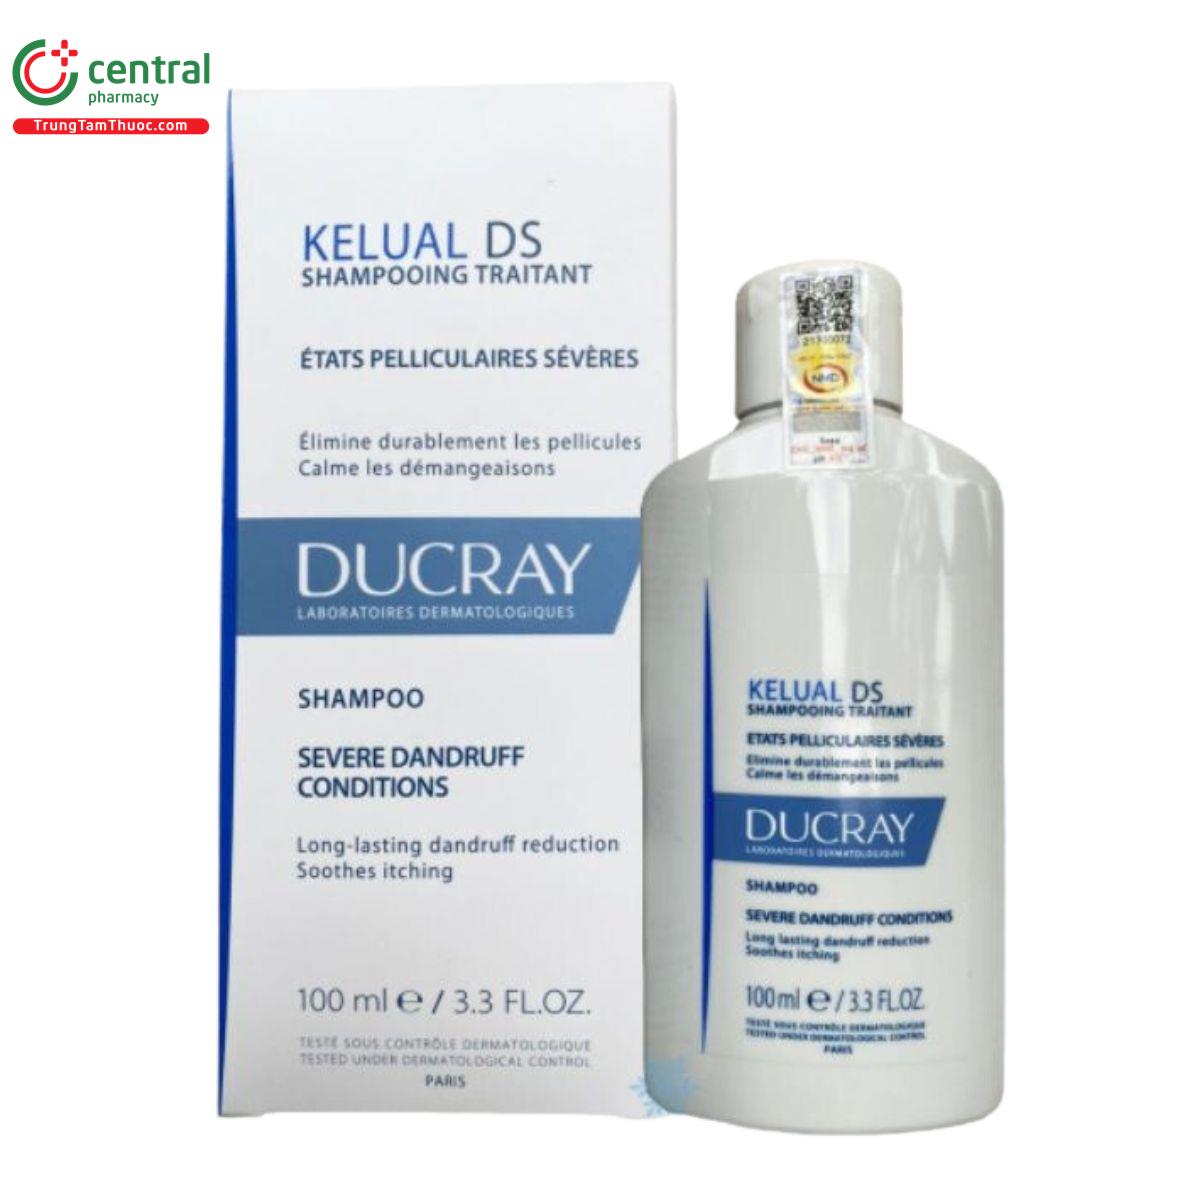 ducray kelual ds shampoo 3 Q6237